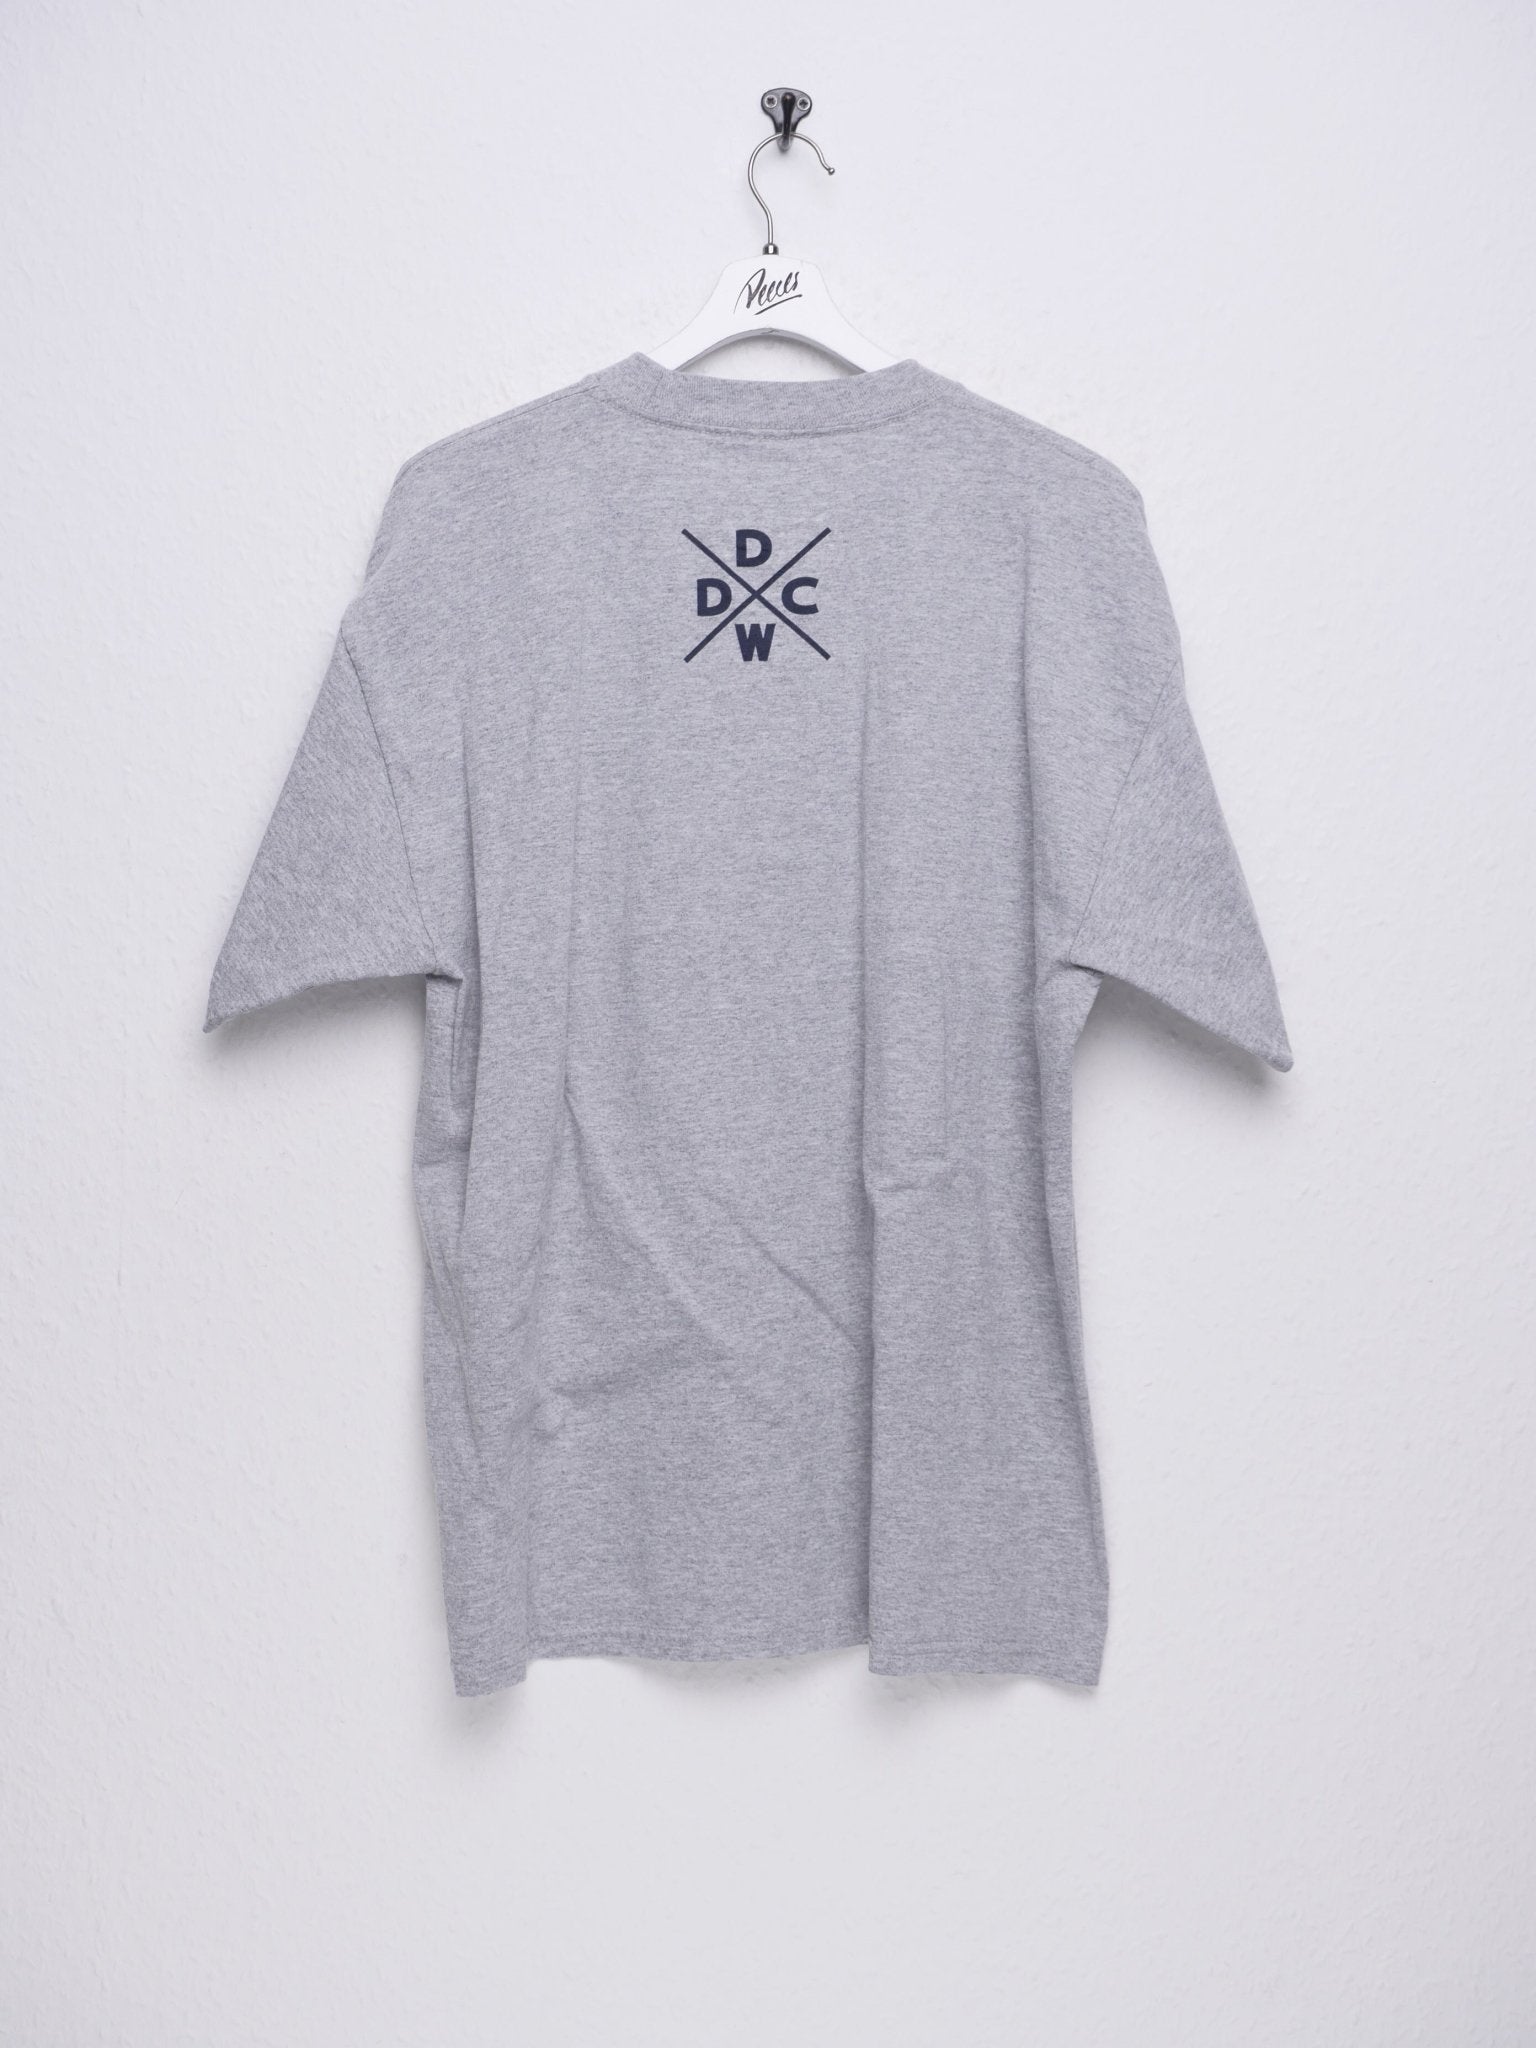 printed Deadweight grey Shirt - Peeces